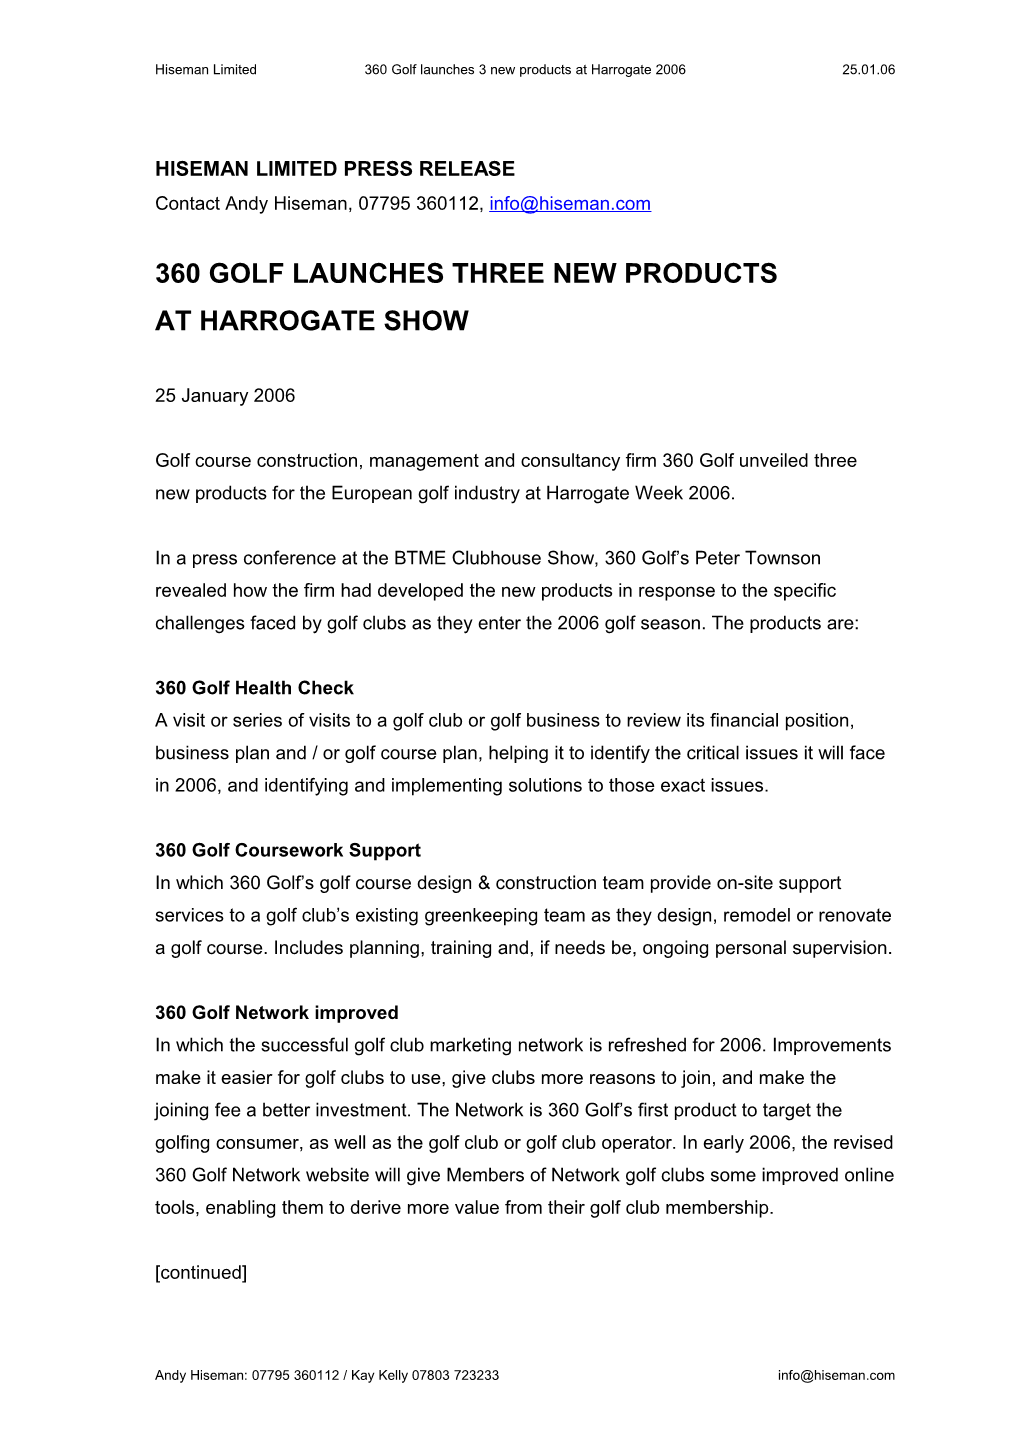 360 Golf - Press Release